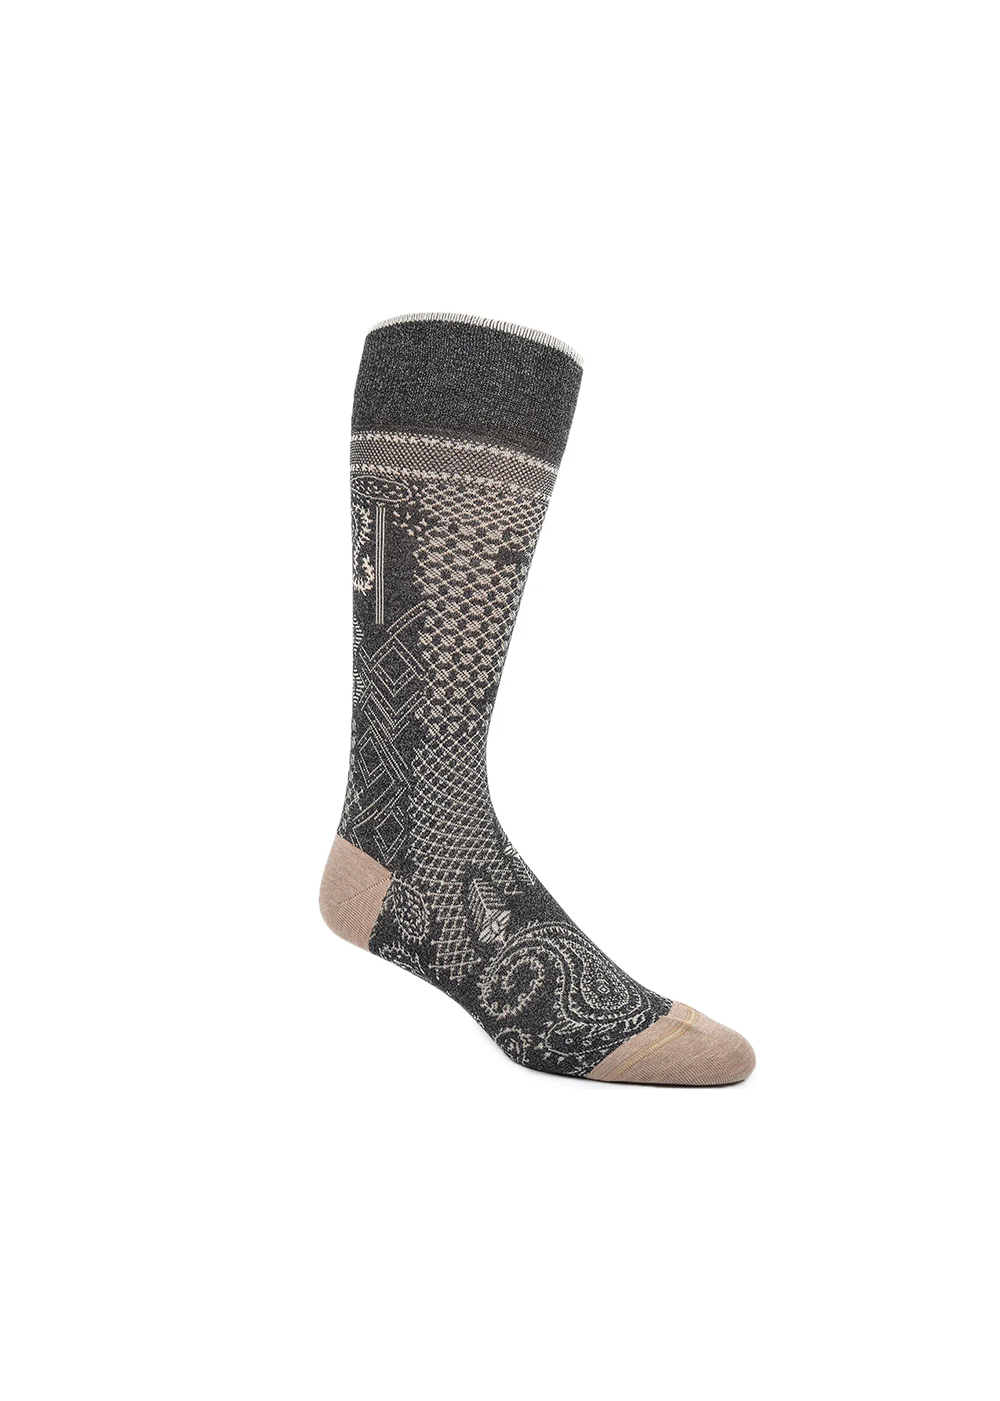 Dion Brocade Cotton Socks - Black/Latte - Dion Canada - Danali